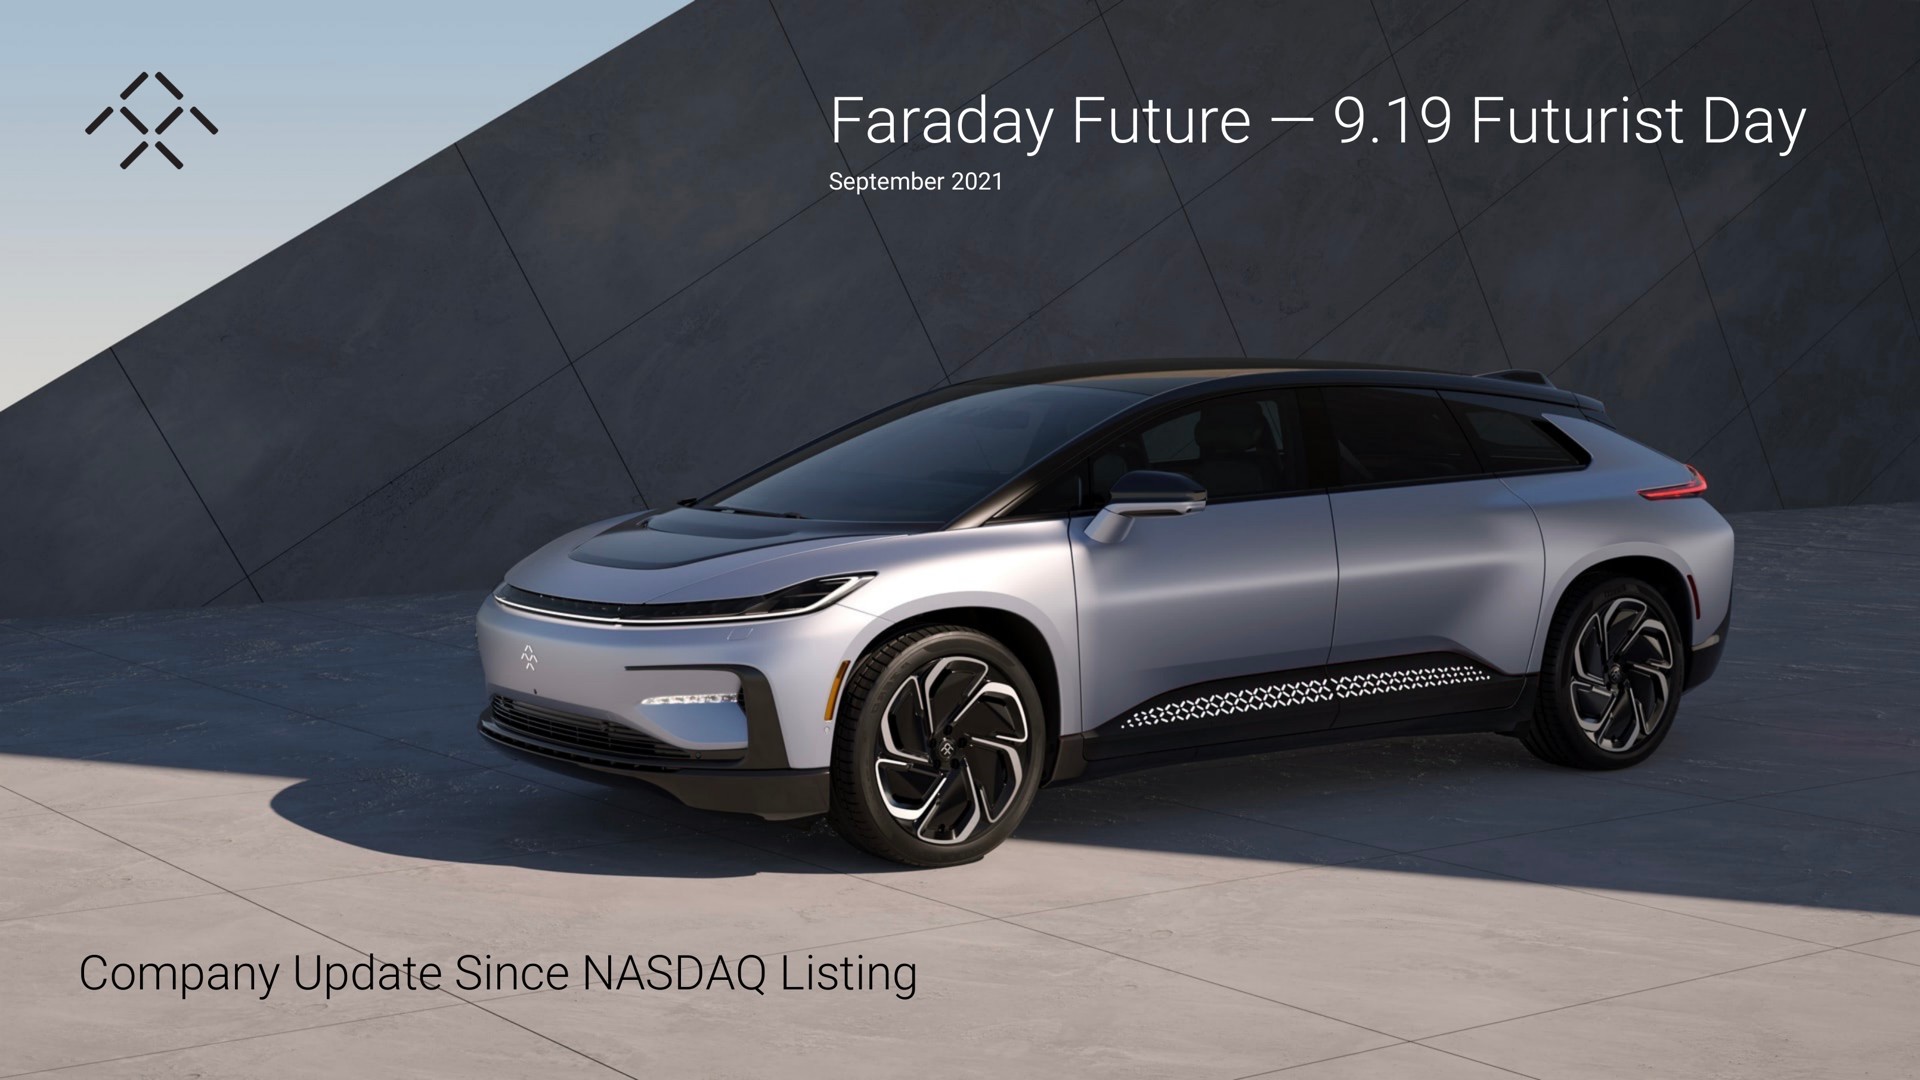 faraday future futurist day company update since listing | Faraday Future